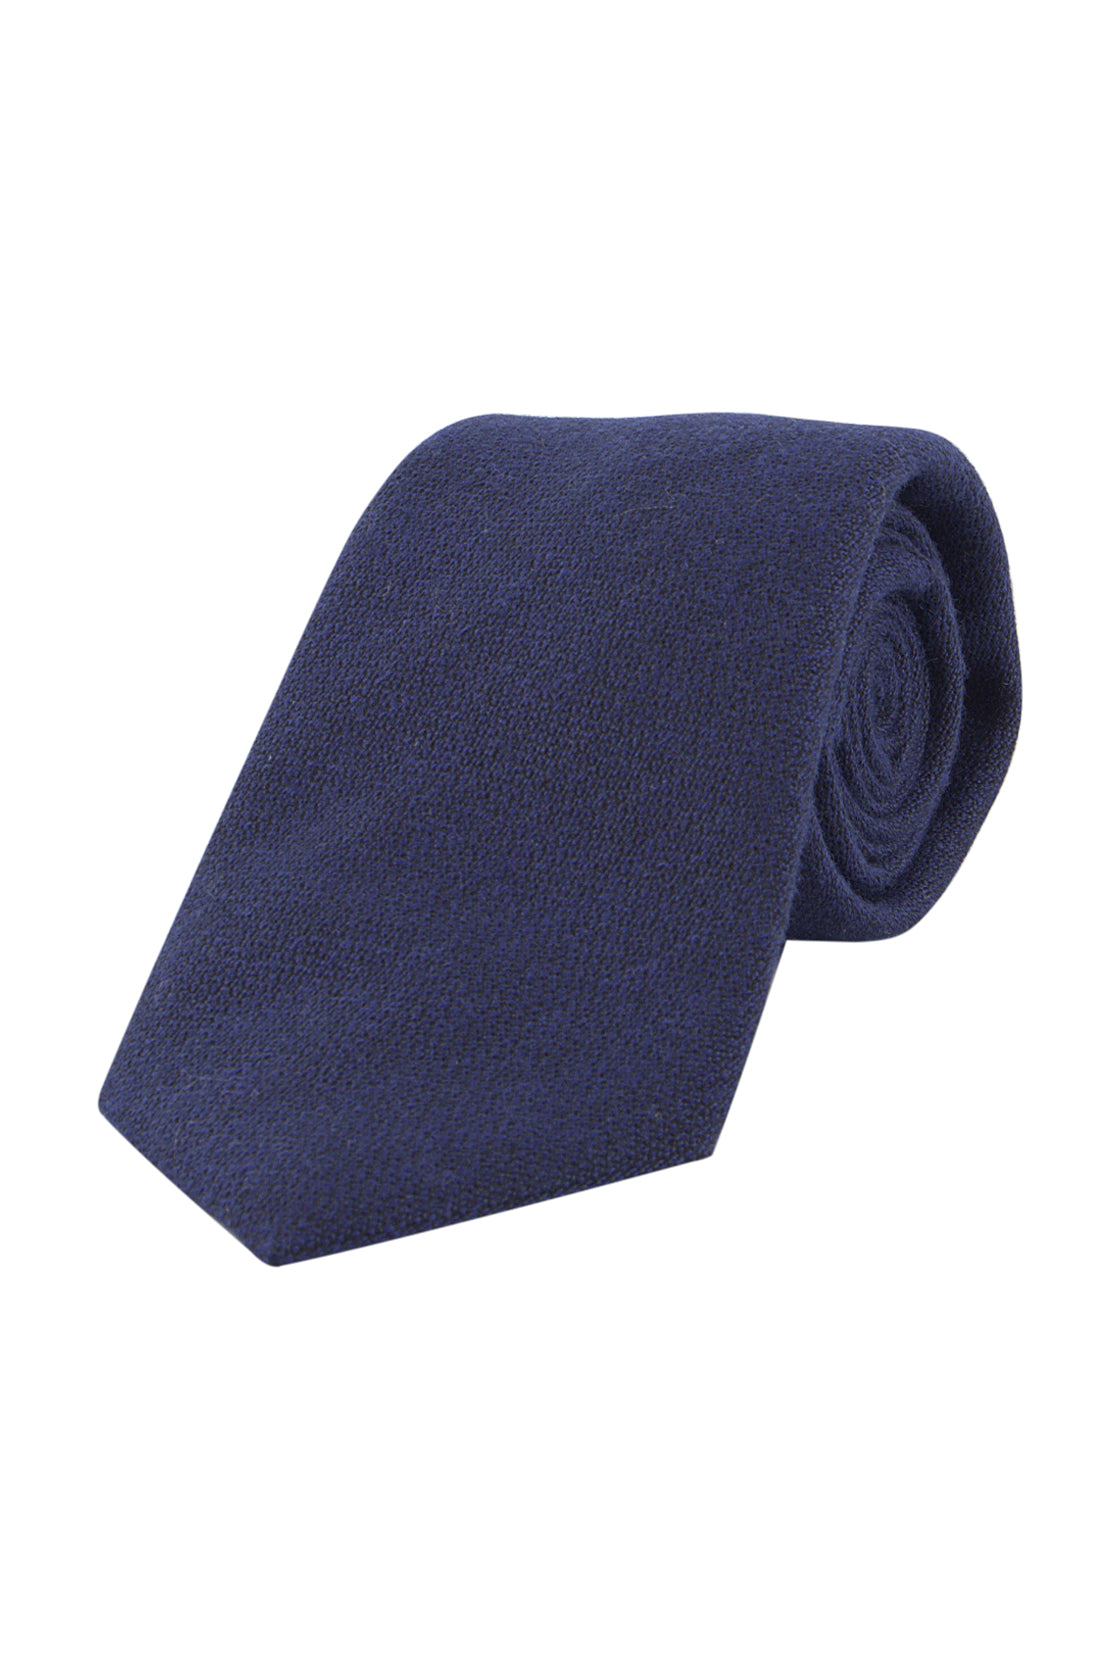 Hemley 7.5cm Wool/Silk Tie Blue 1240019-2/1